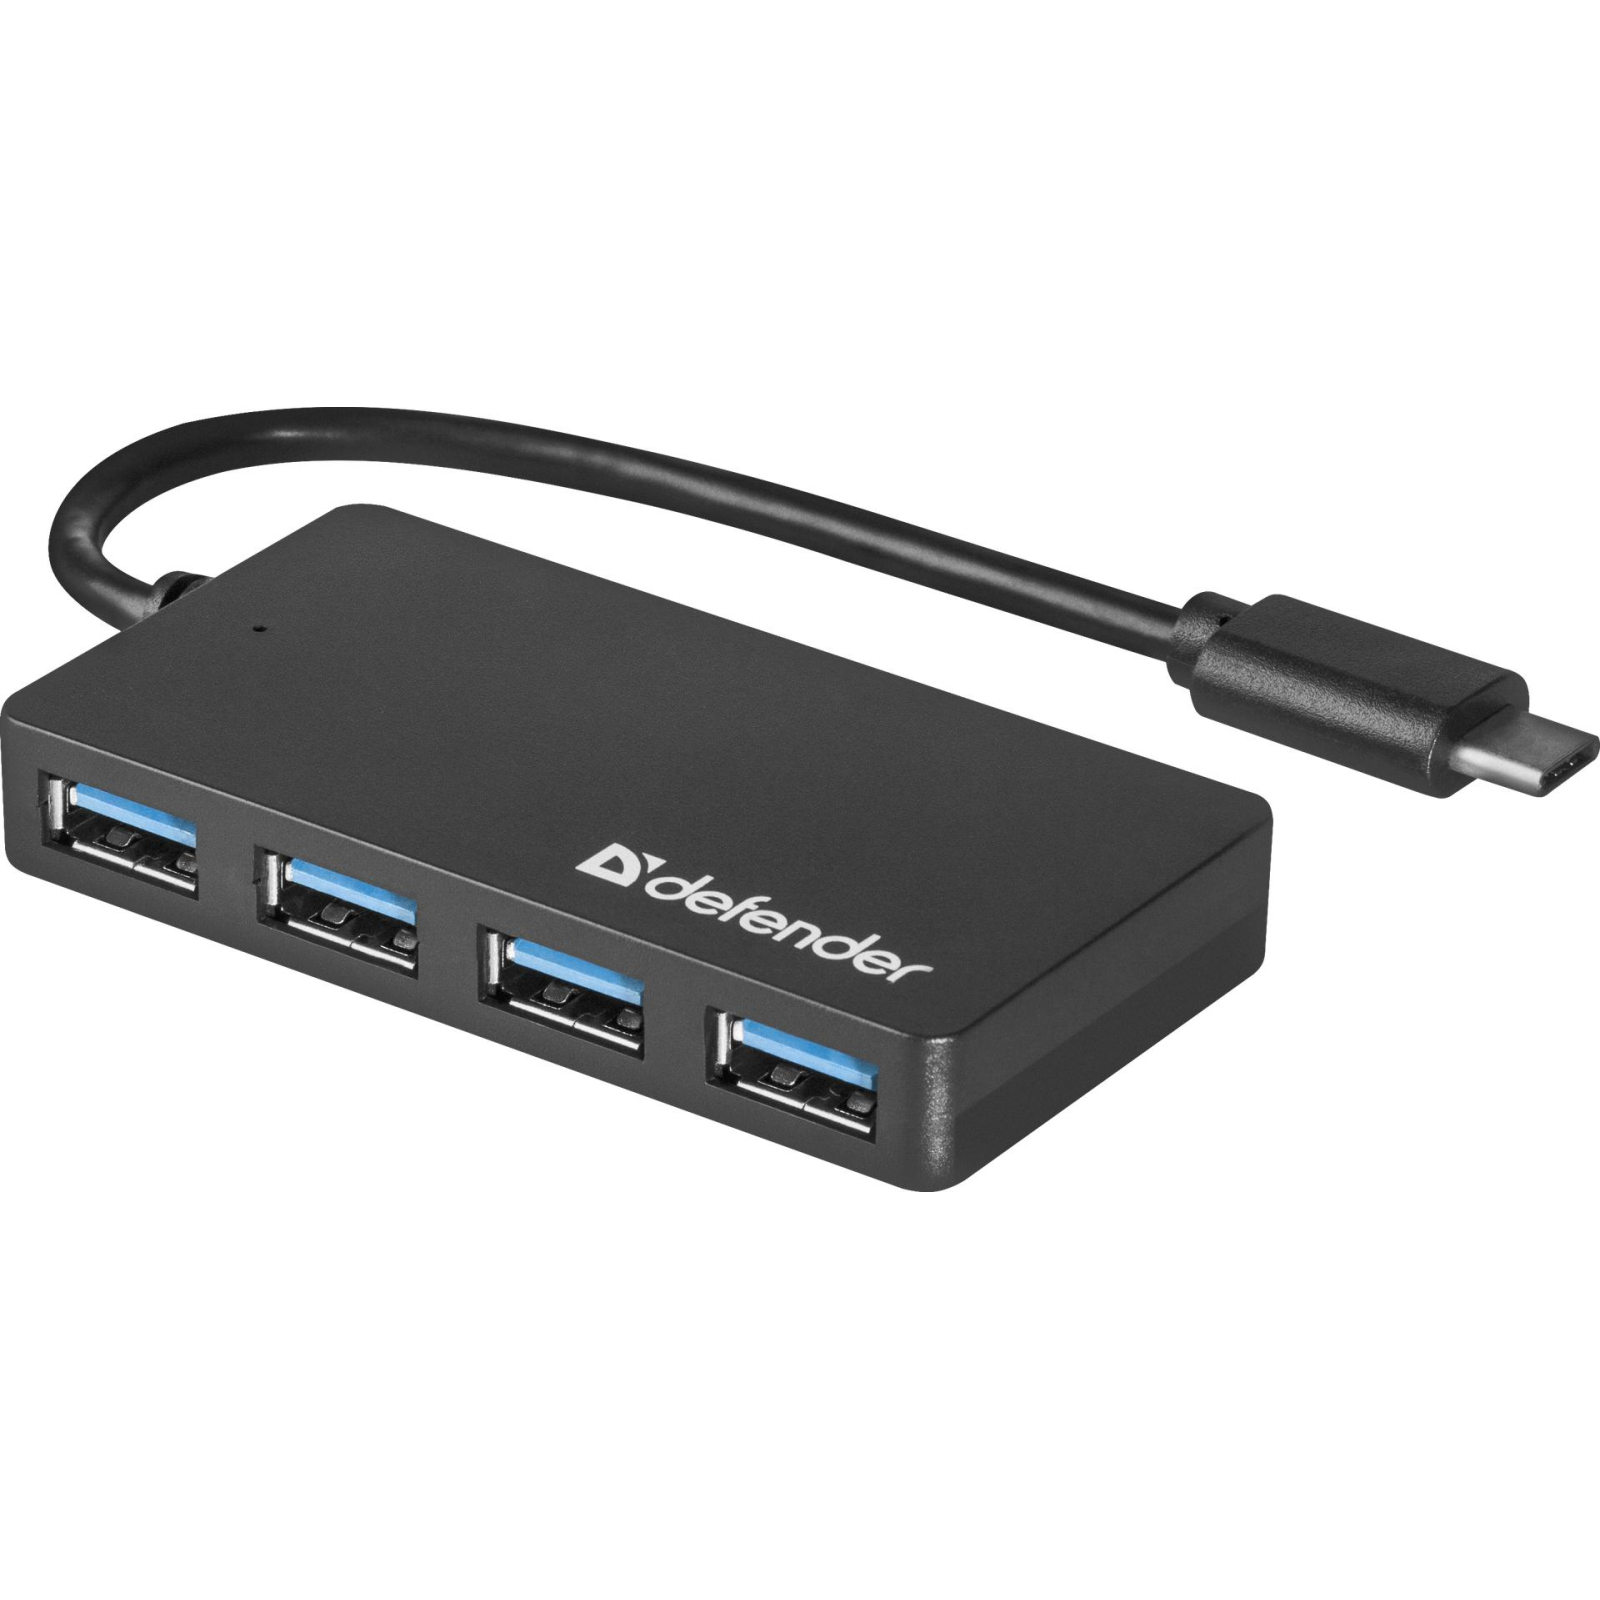 Концентратор Defender Quadro Transfer USB3.1 TYPE C - USB3.0, 4 port (83208)